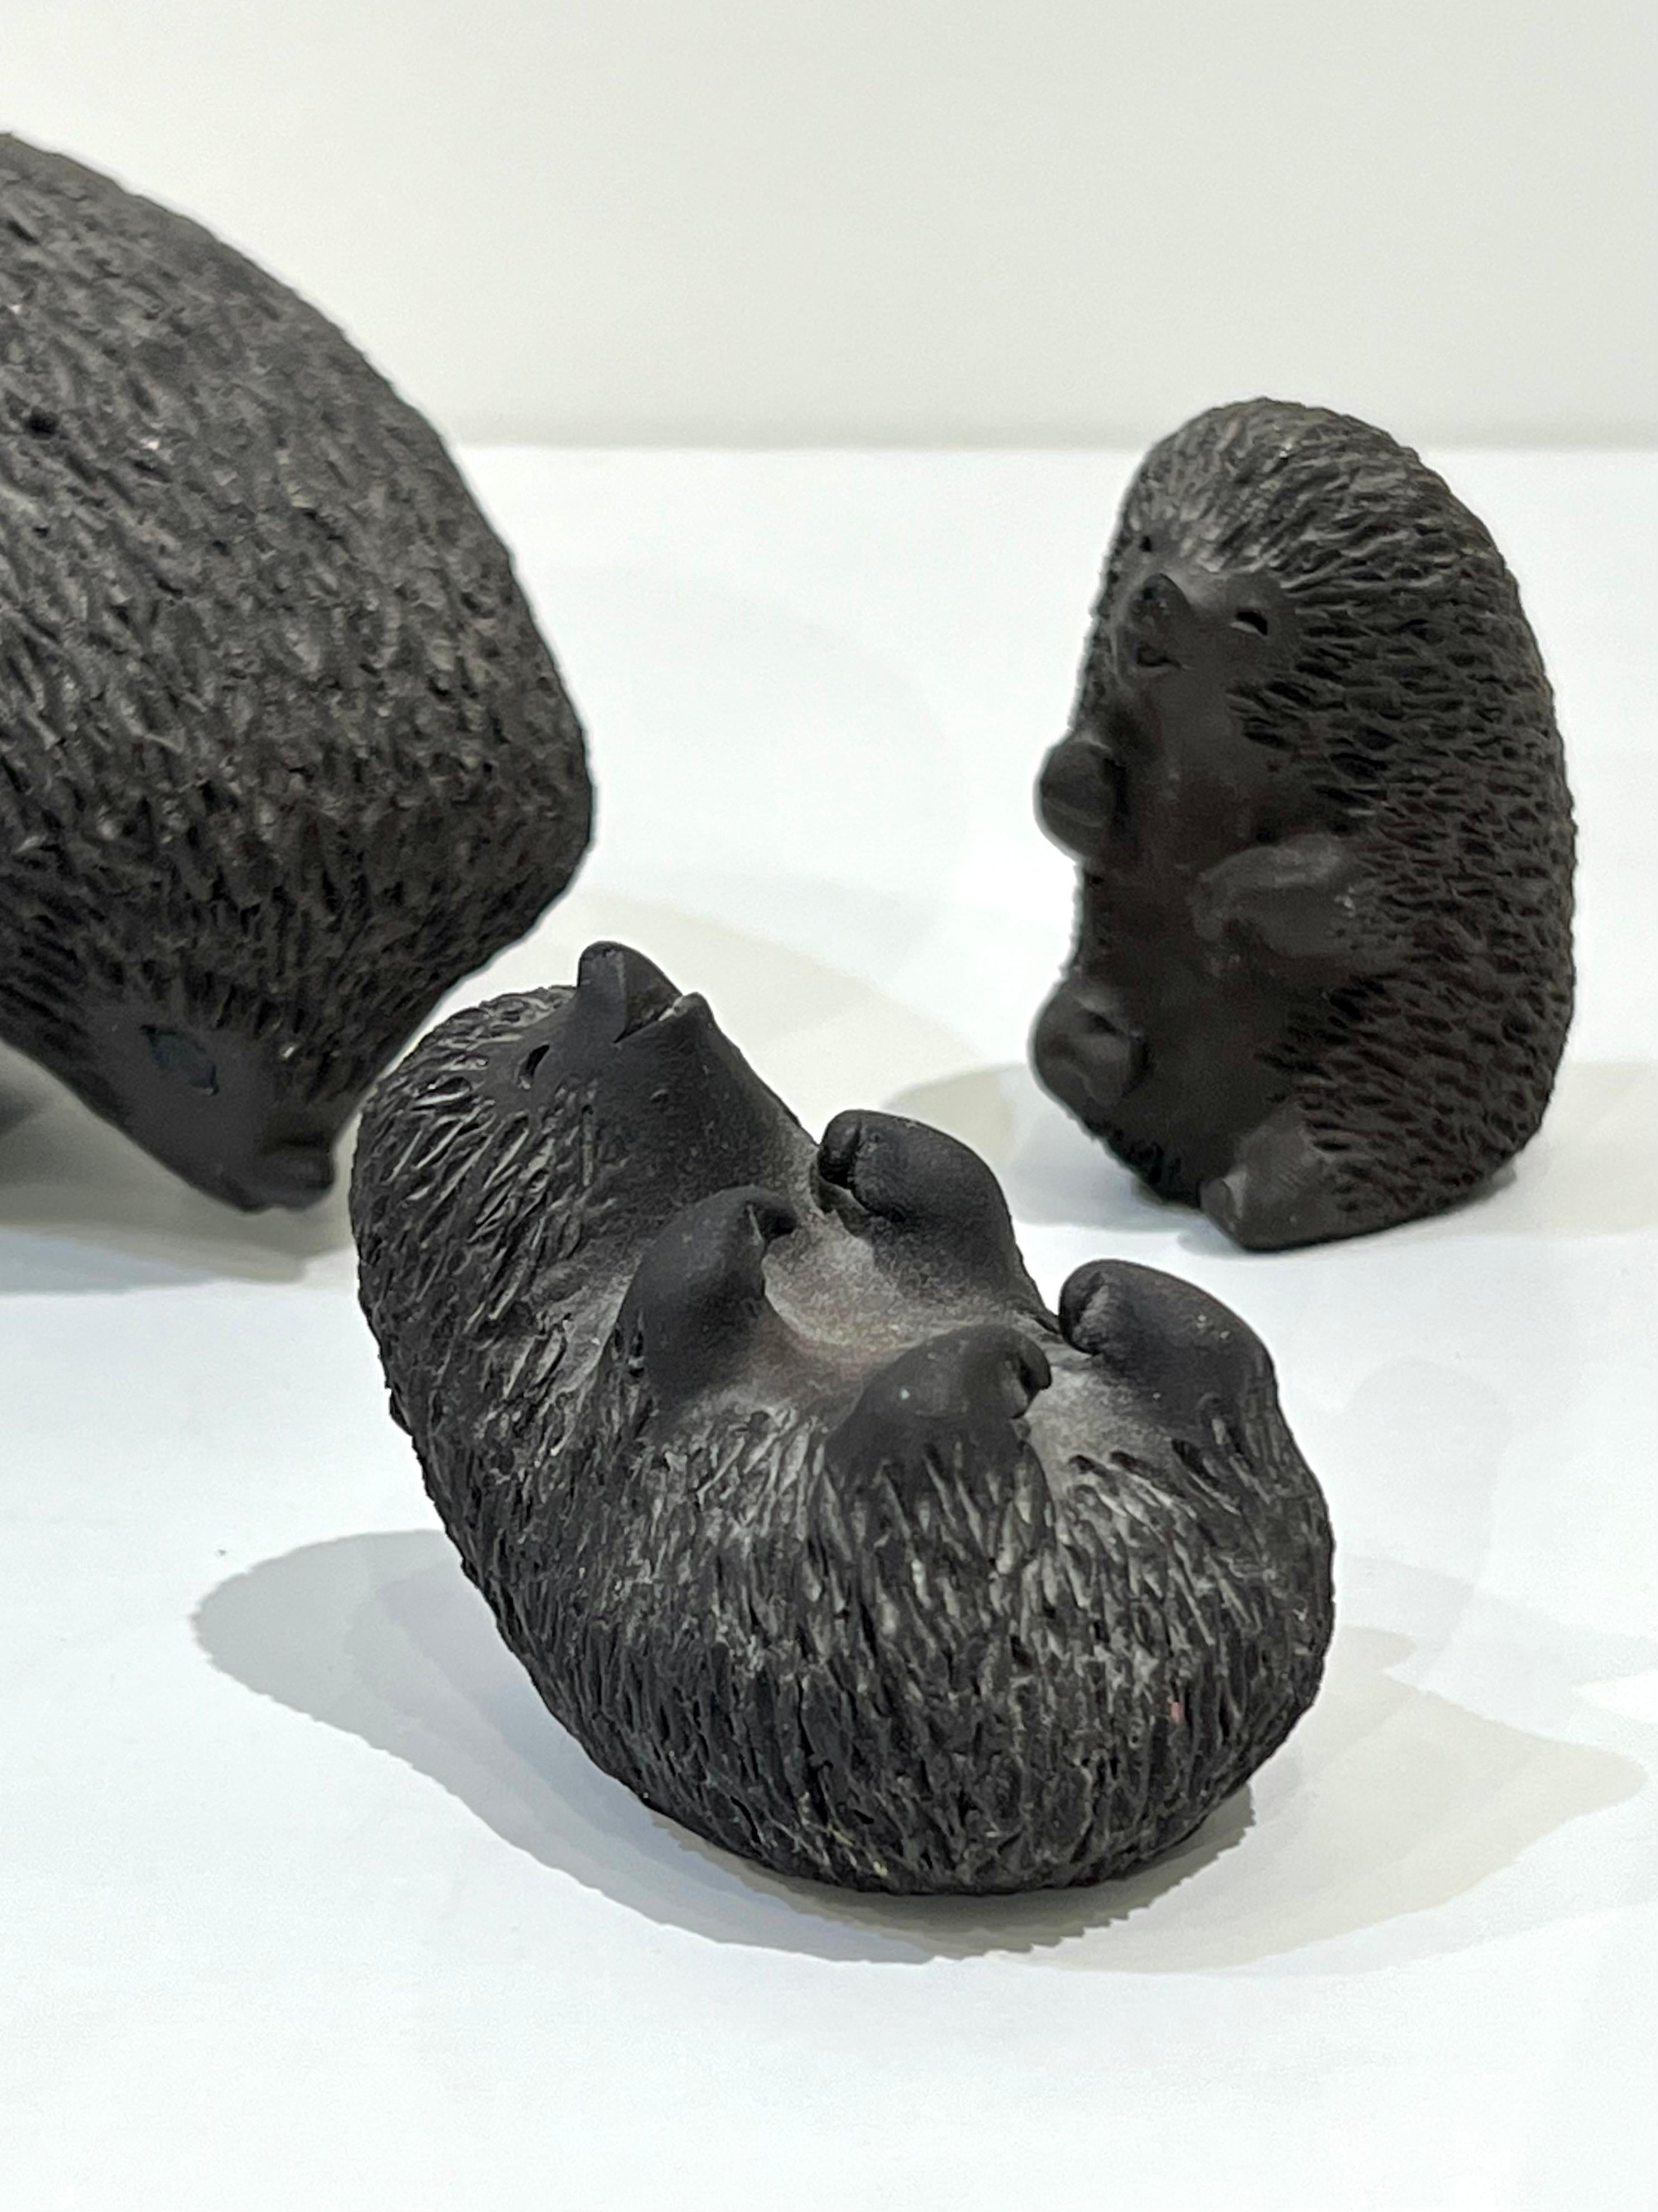 Set of 4 ceramic hedgehog figurines by Ellen Karlsen. Made in Denmark, circa 1960's.
Aproximate dimensions:
Largest - 7